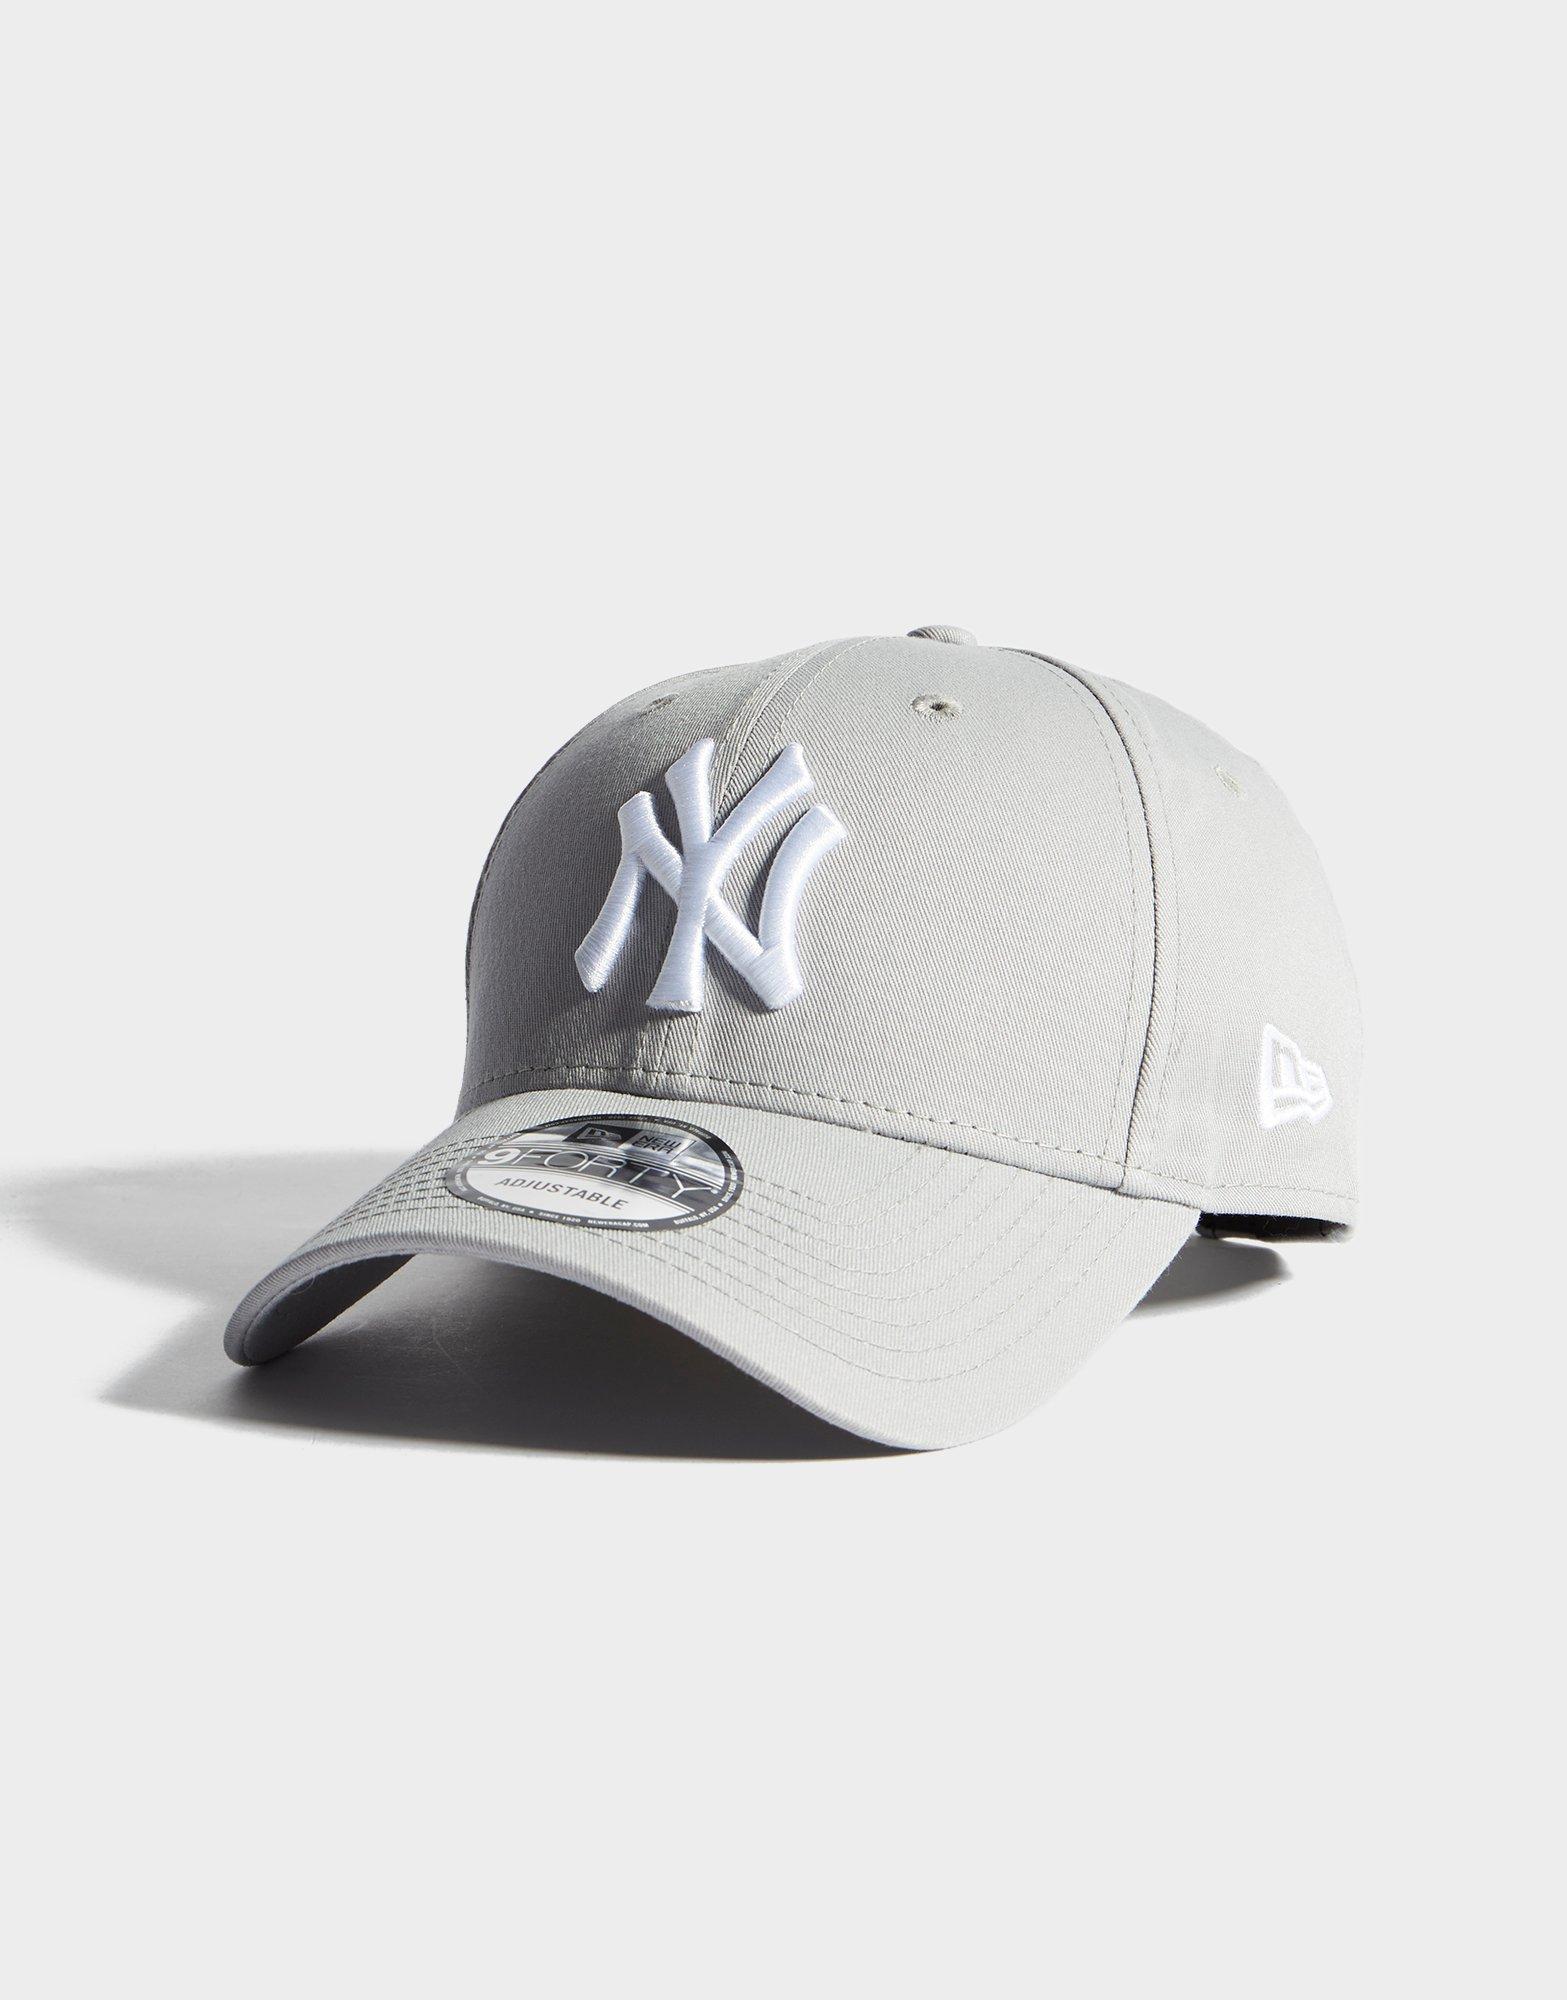 Vertrappen geest vaardigheid Grey New Era MLB New York Yankees 9FORTY Cap | JD Sports UK